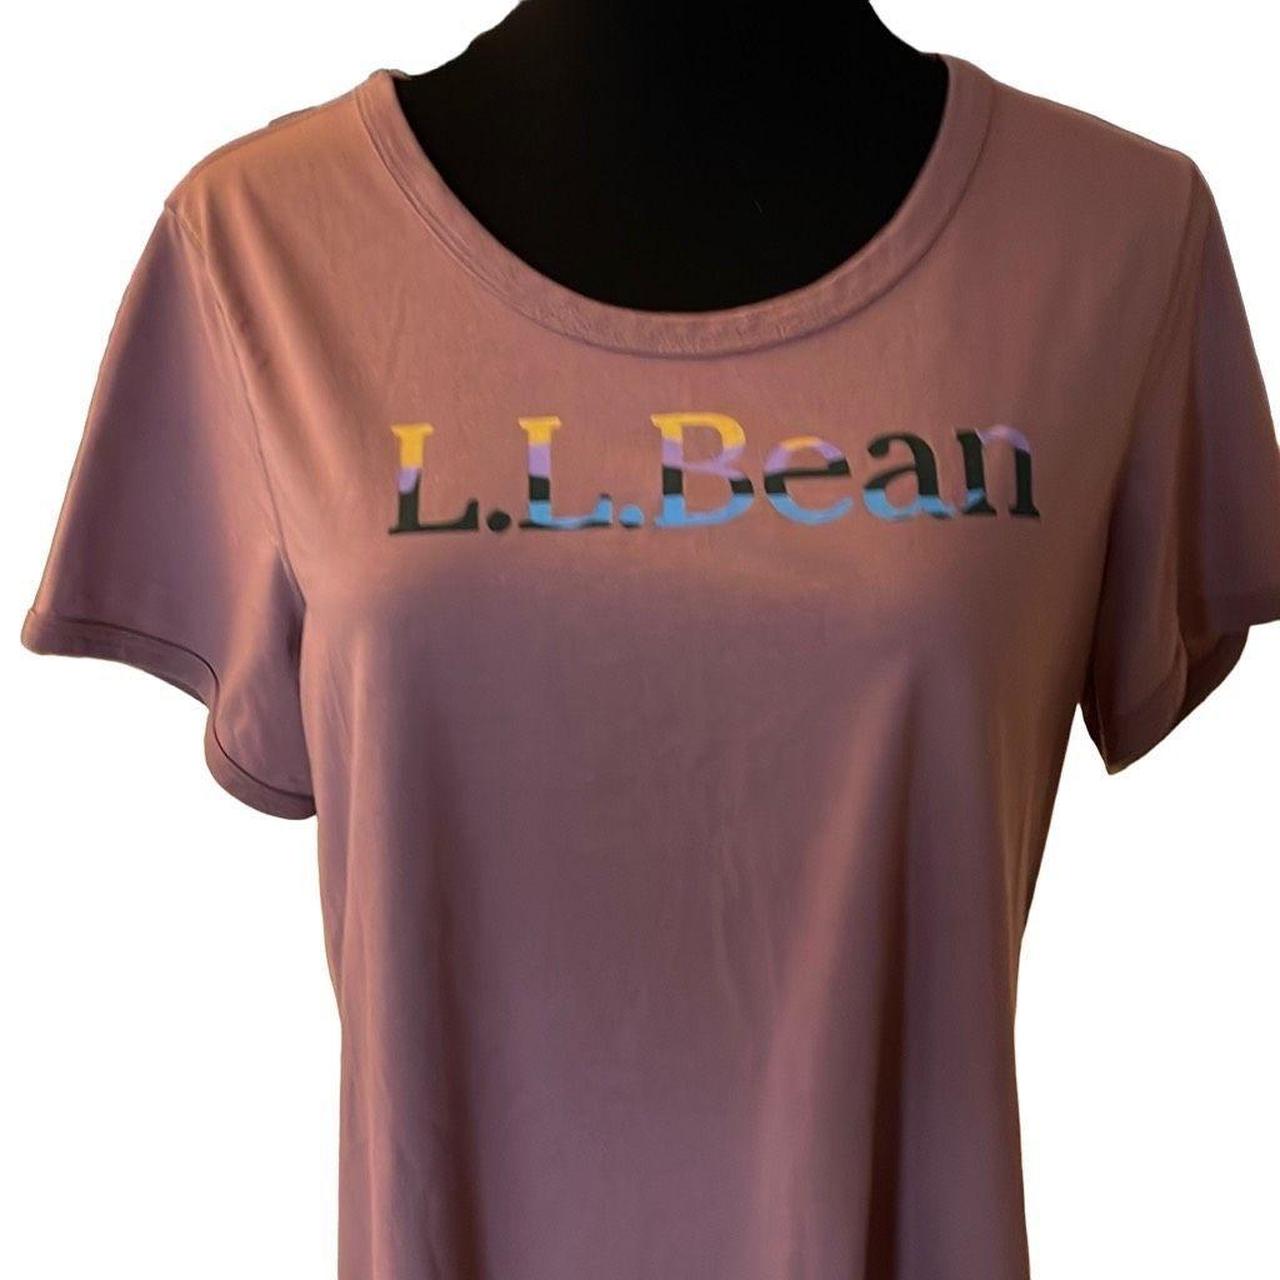 L.L.Bean Women's Short-Sleeve Crewneck Tee